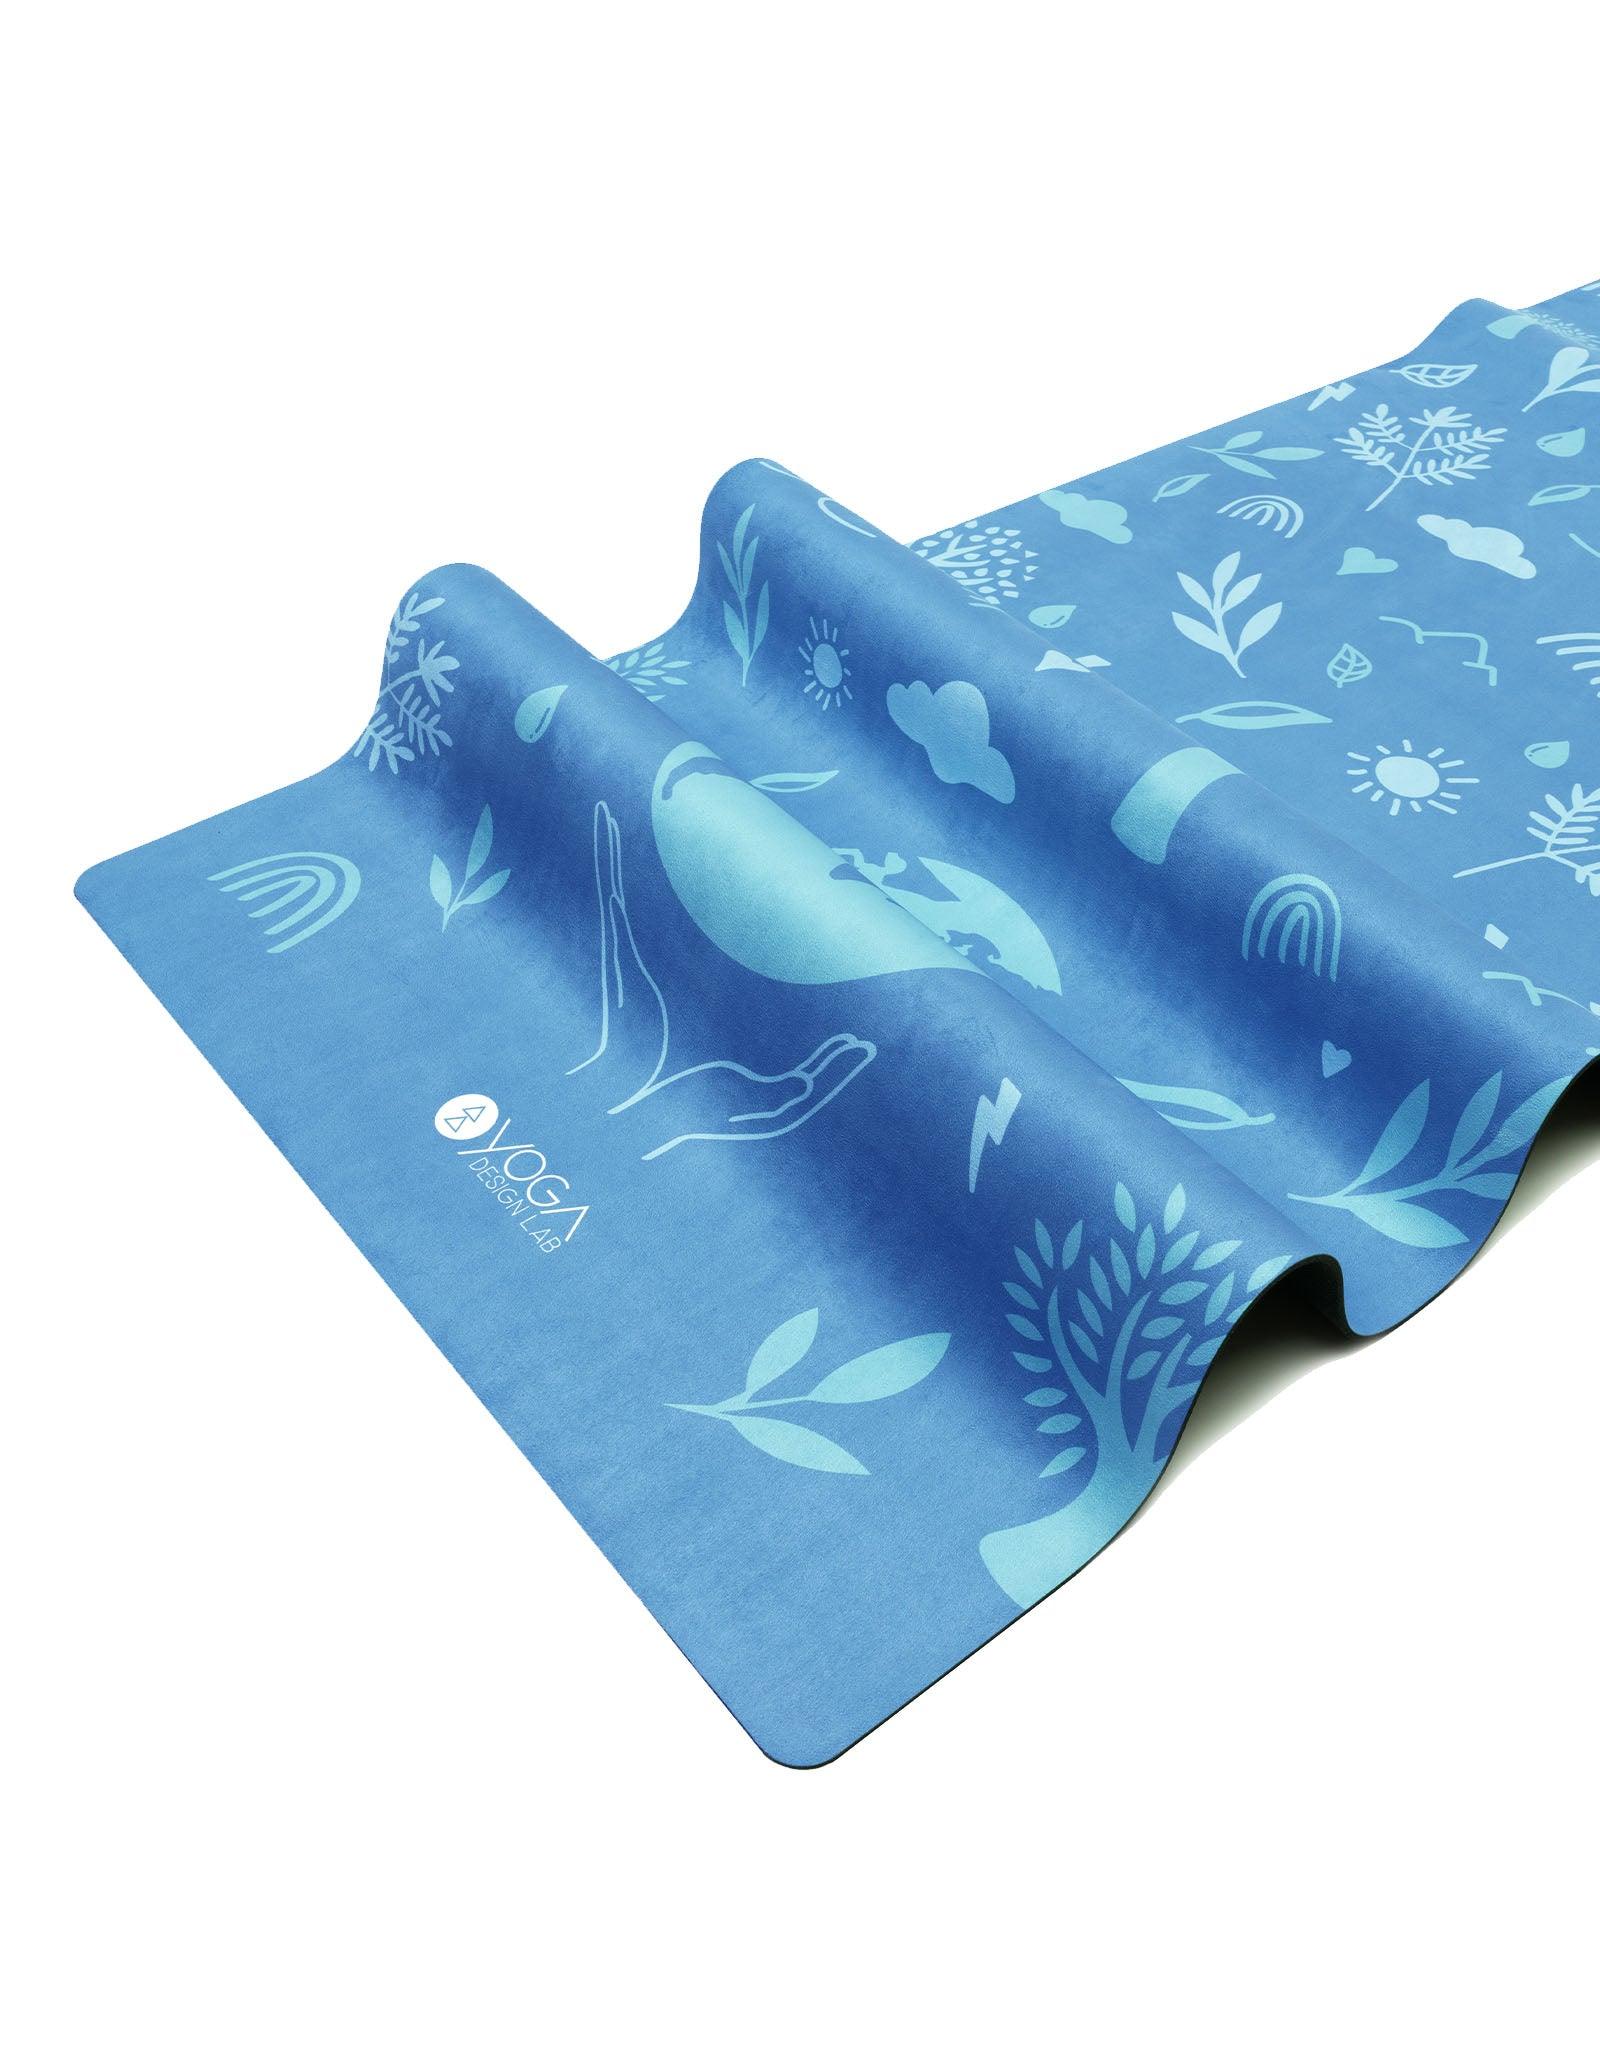 Combo Yoga Mat: 2-in-1 (Mat + Towel) - Bali Blue Earth - Lightweight, Ultra - Soft - Yoga Design Lab 